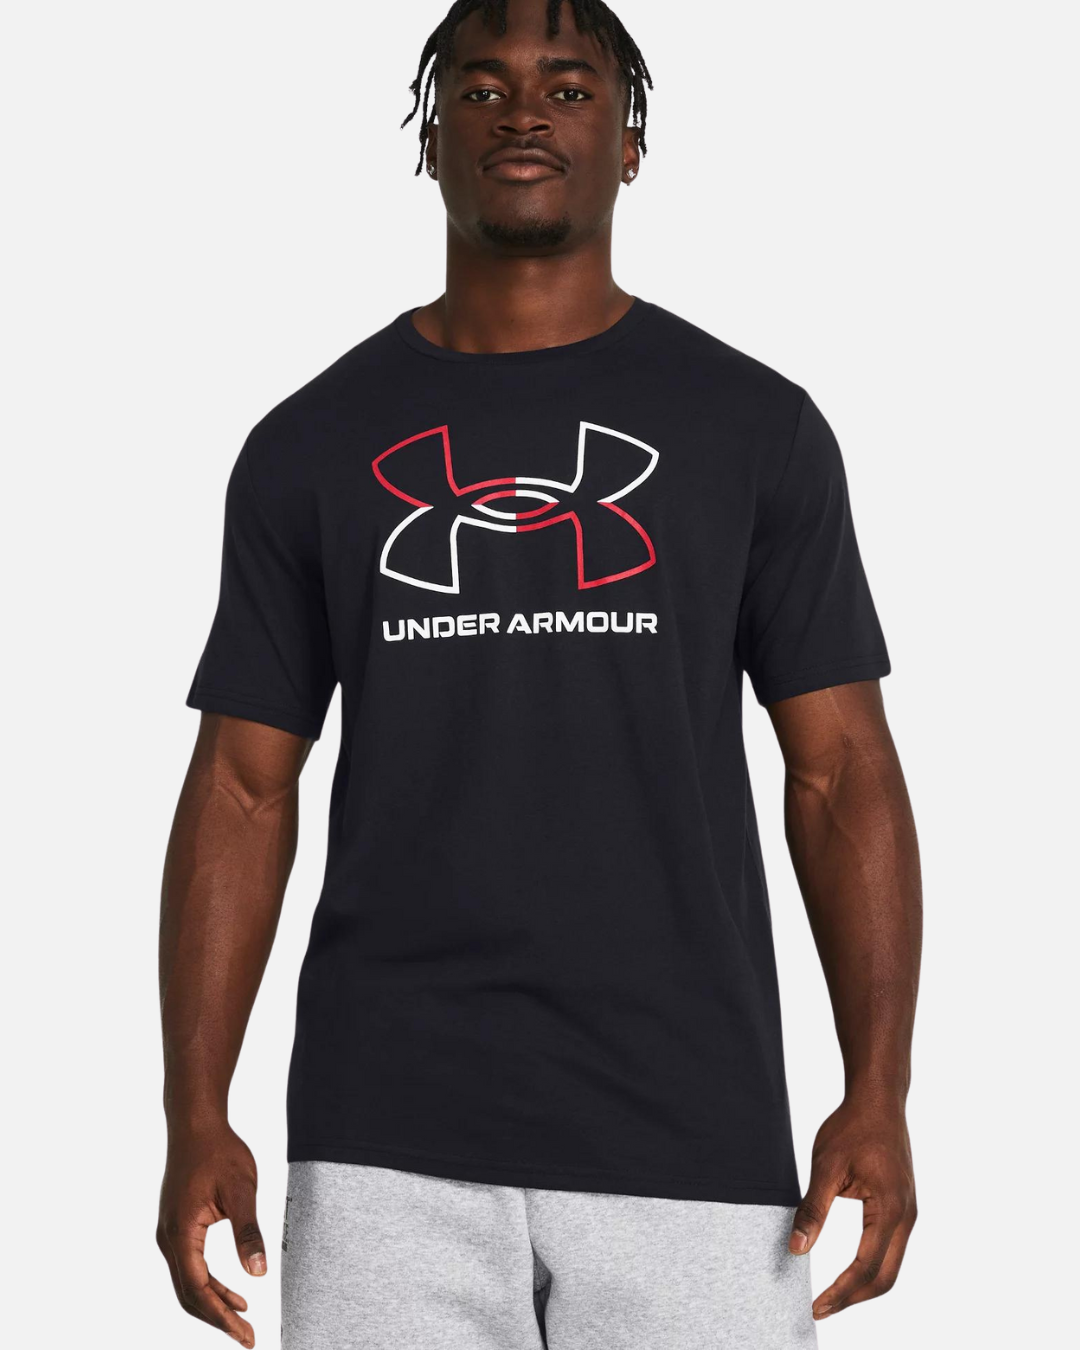 Under Armor Foundation T-shirt - Black/Red